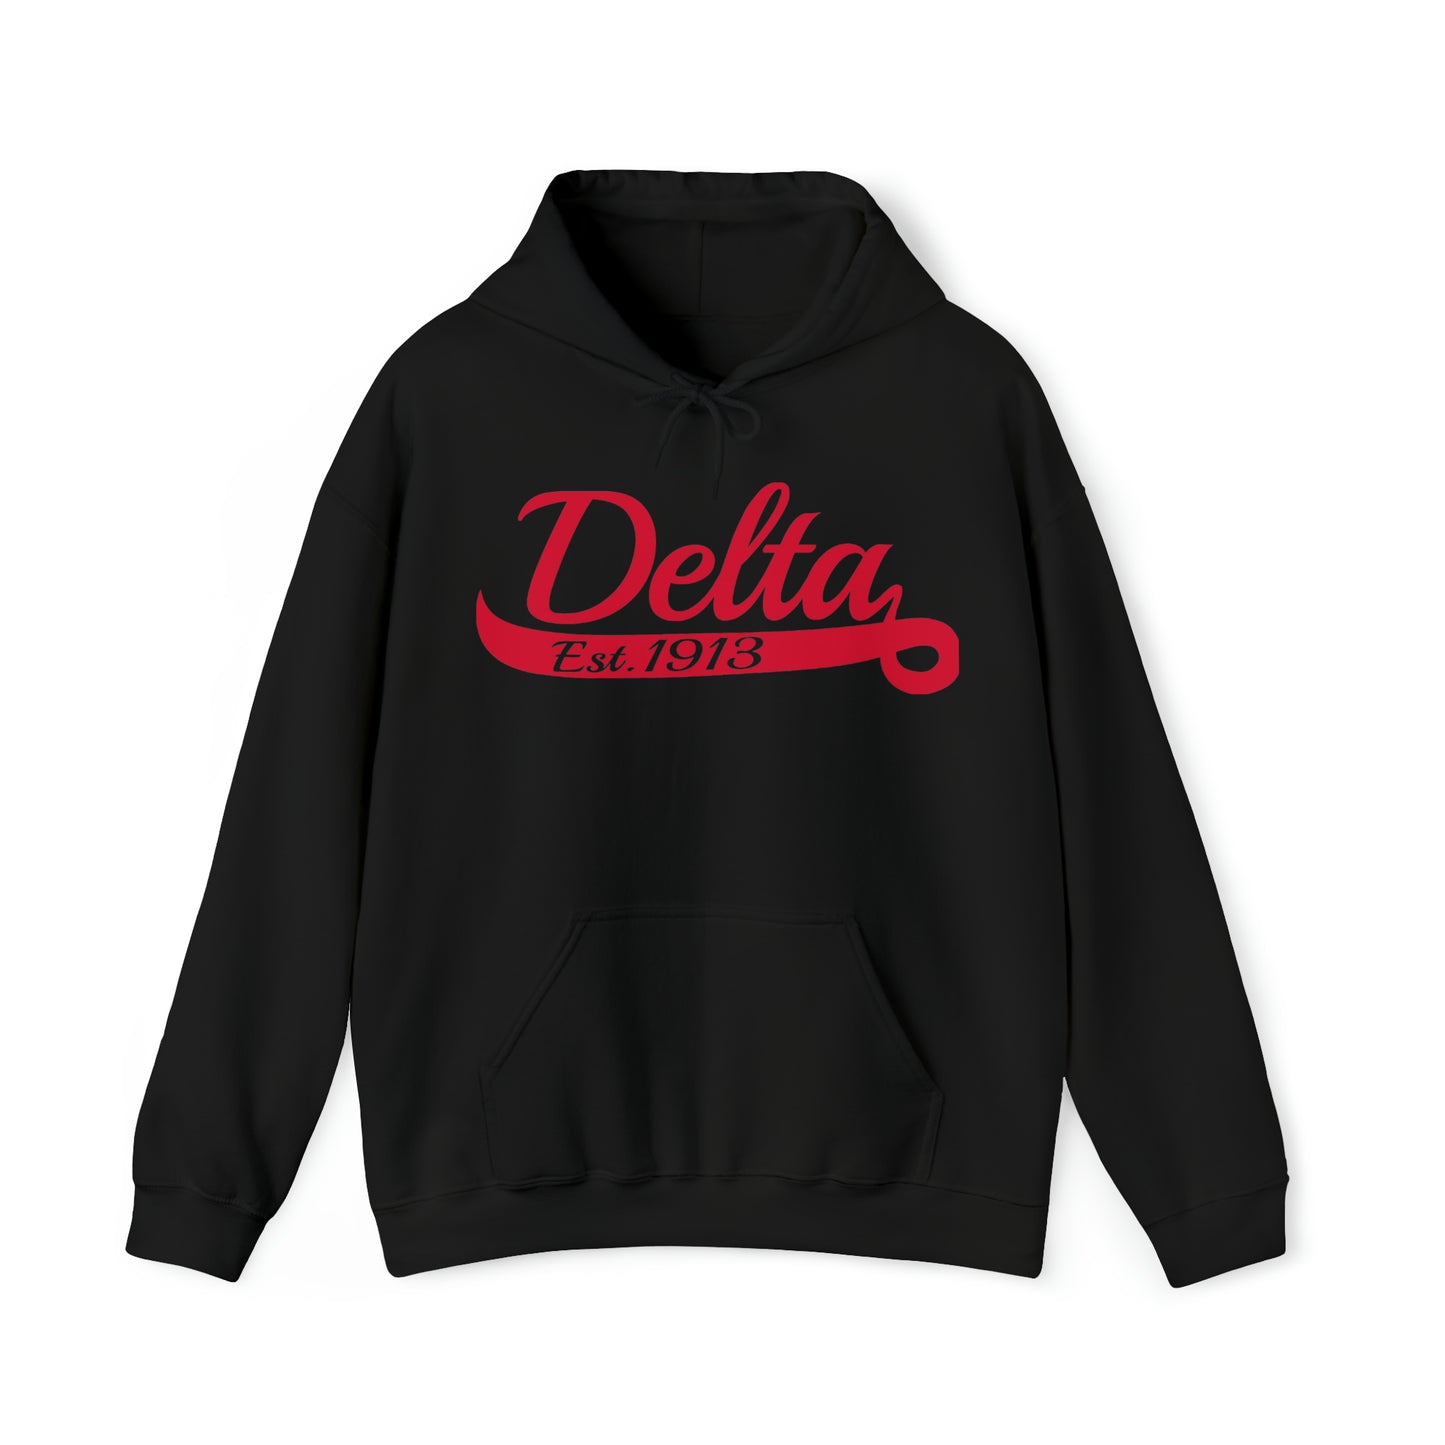 Delta EST. 1913 Heavy Blend Hooded Sweatshirt